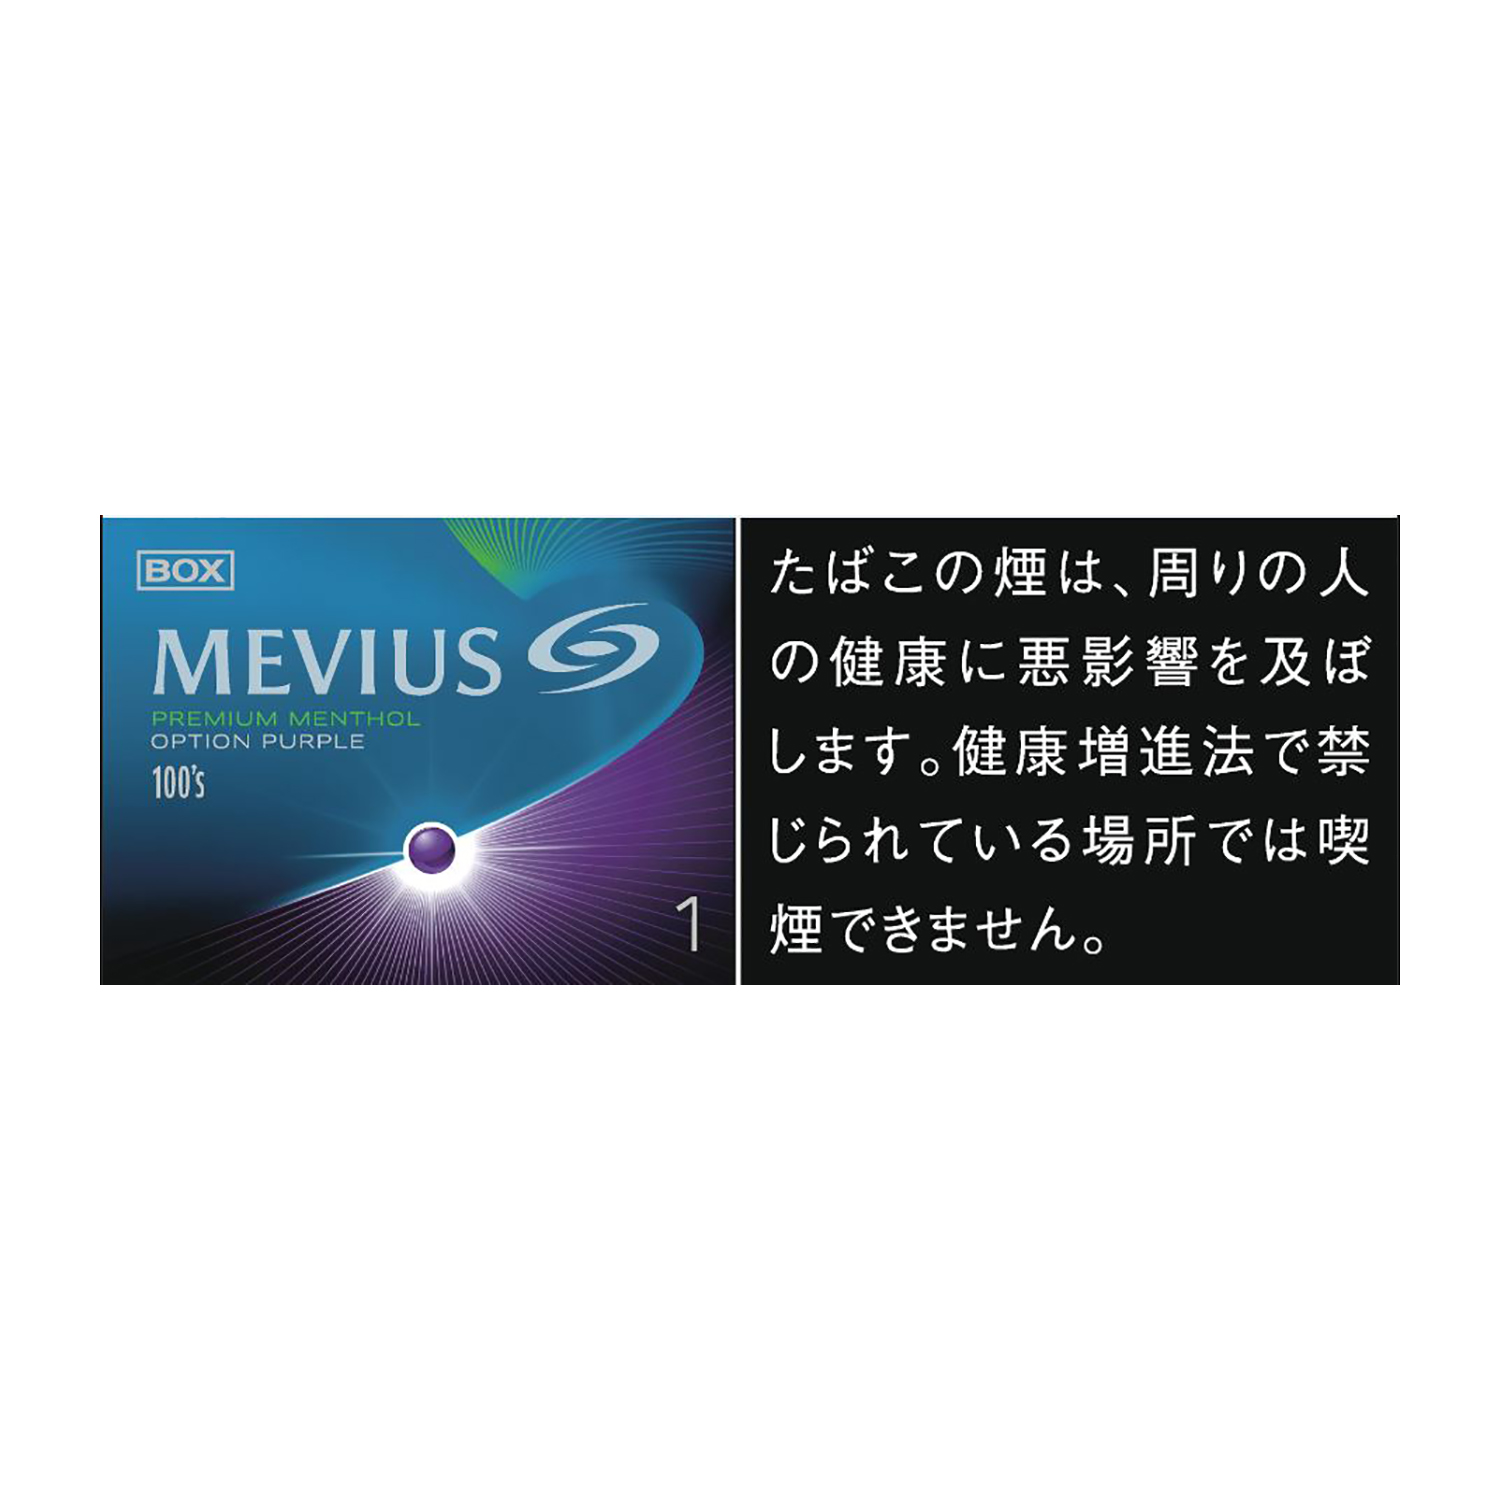 MEVIUS PREMIUM MENTHOL OPTION PURPLE ONE 100's / Tar:1mg Nicotine:0.1mg